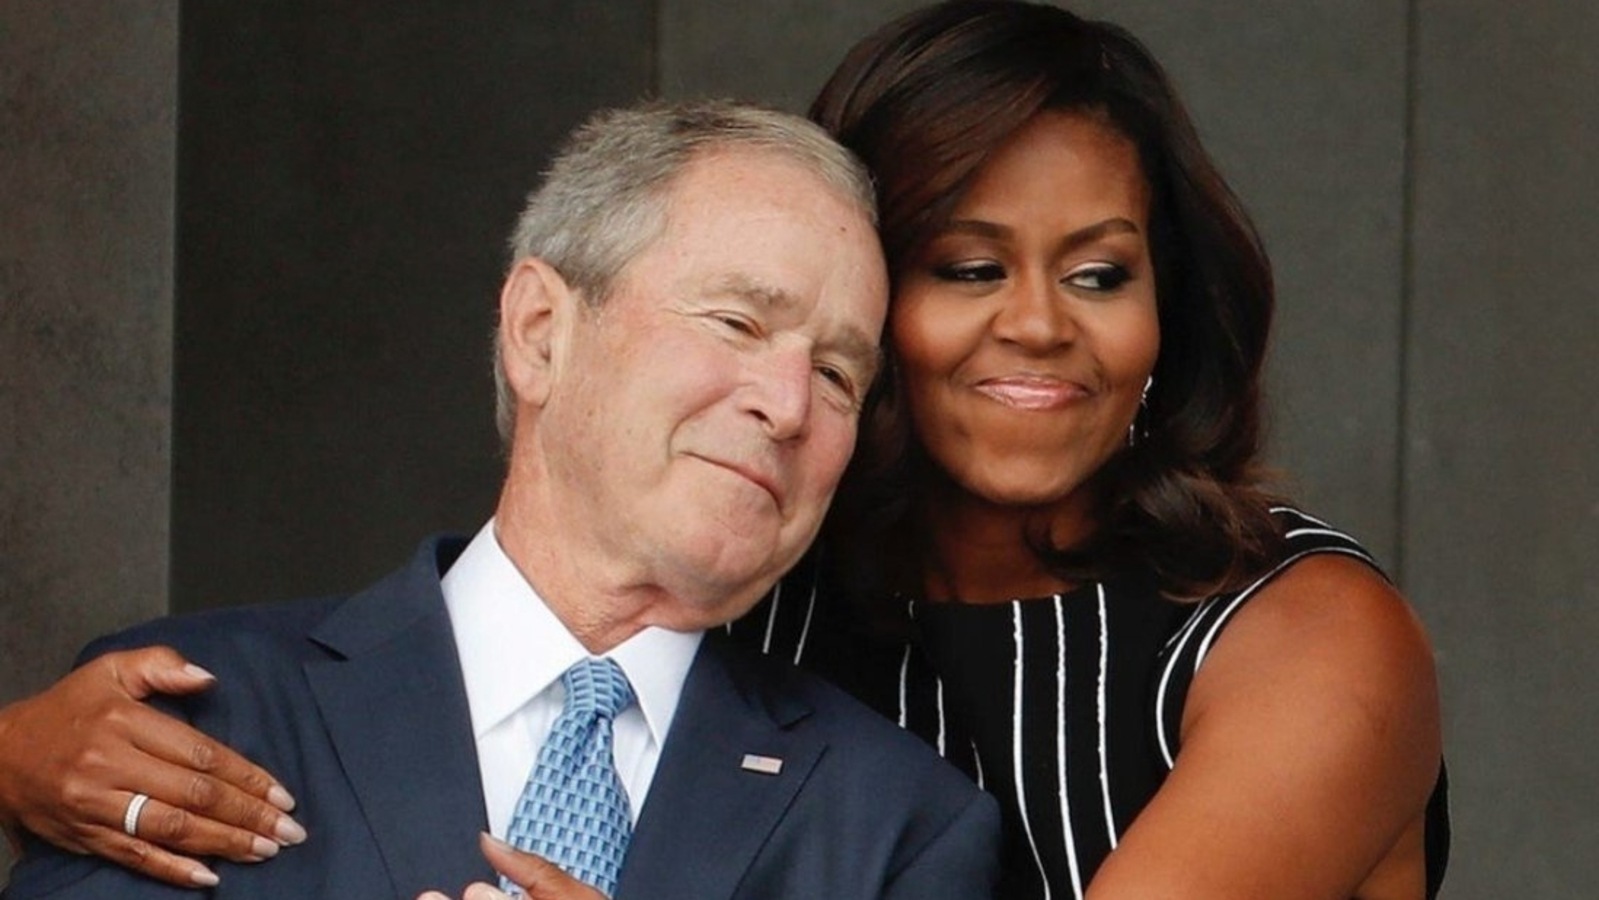    George W. Bush med smuk, Kone Laura Bush 